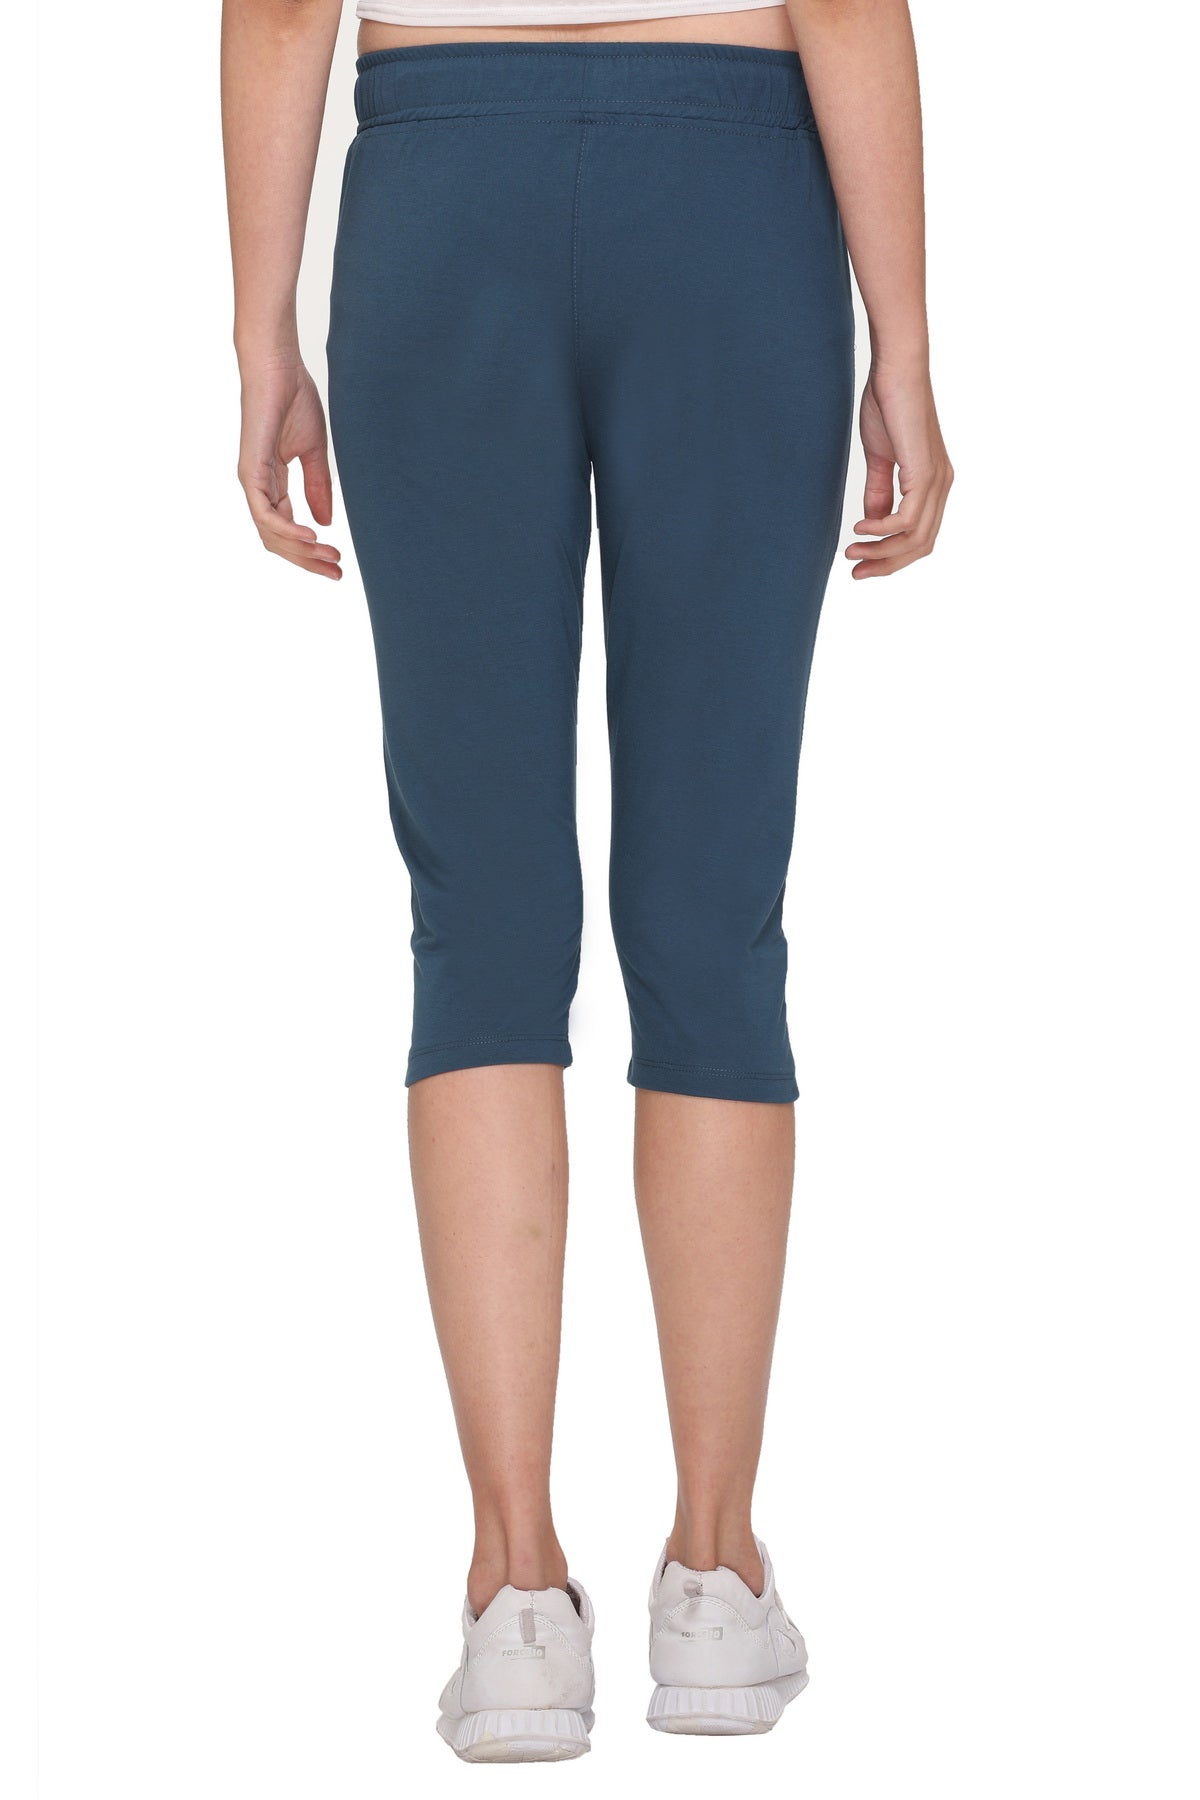 Cotton Capris For Women - Half Pants Pack Of 2 (sky Blue & Black), Ladies  Cotton Capri, महिलाओं की सूती कैपरी, वूमेन कॉटन कैपरी - Tanya Enterprises,  Ludhiana